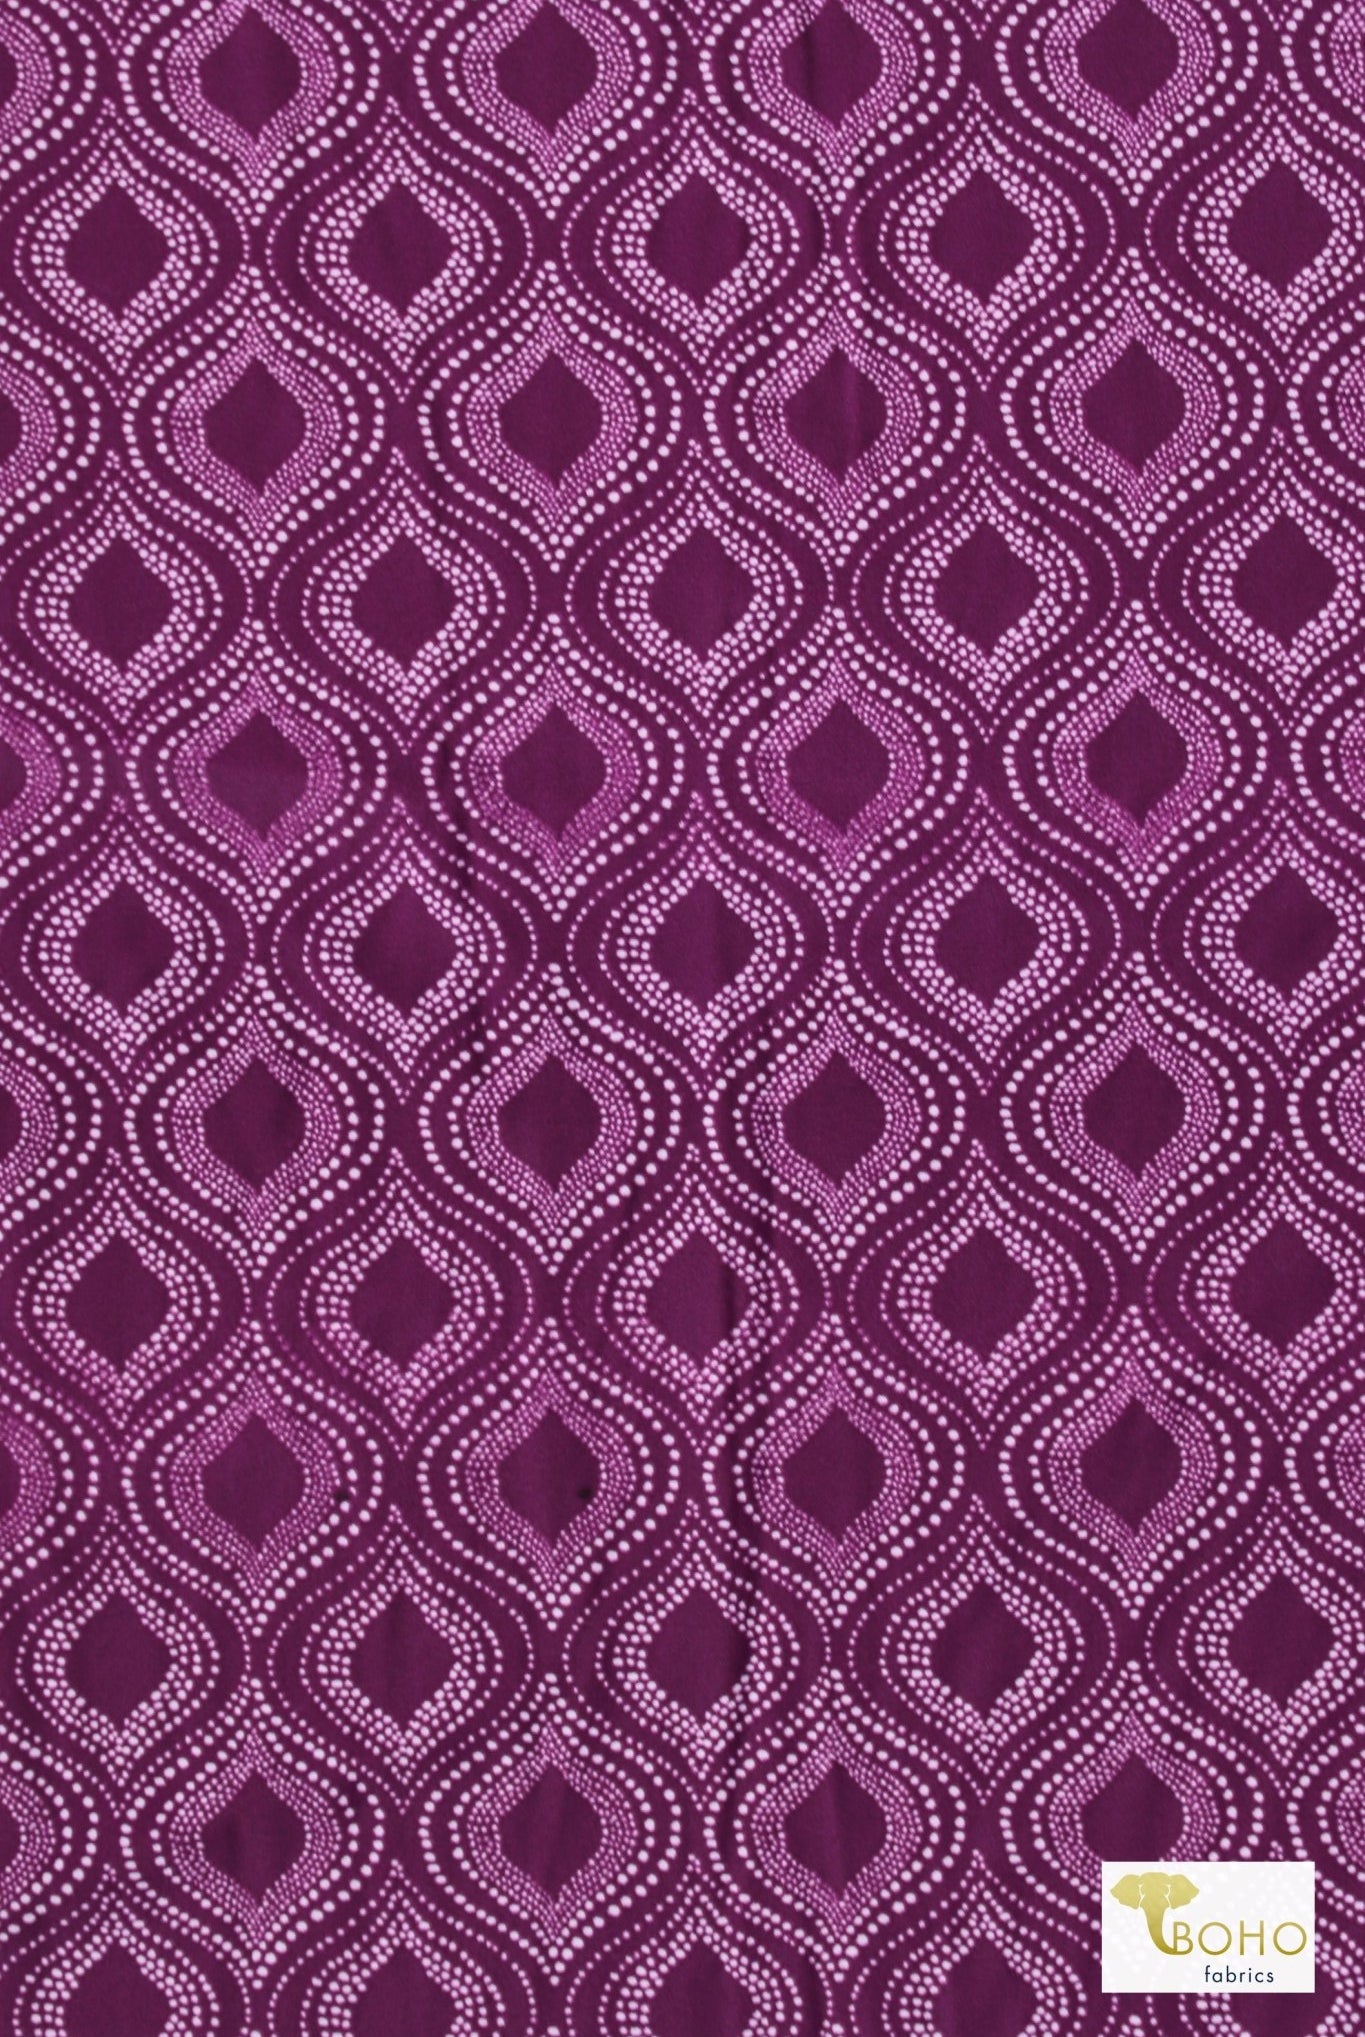 Orchid Marquise Trellis, Swim/Athletic Knit Fabric - Boho Fabrics - Swim Knit, Printed Fabric